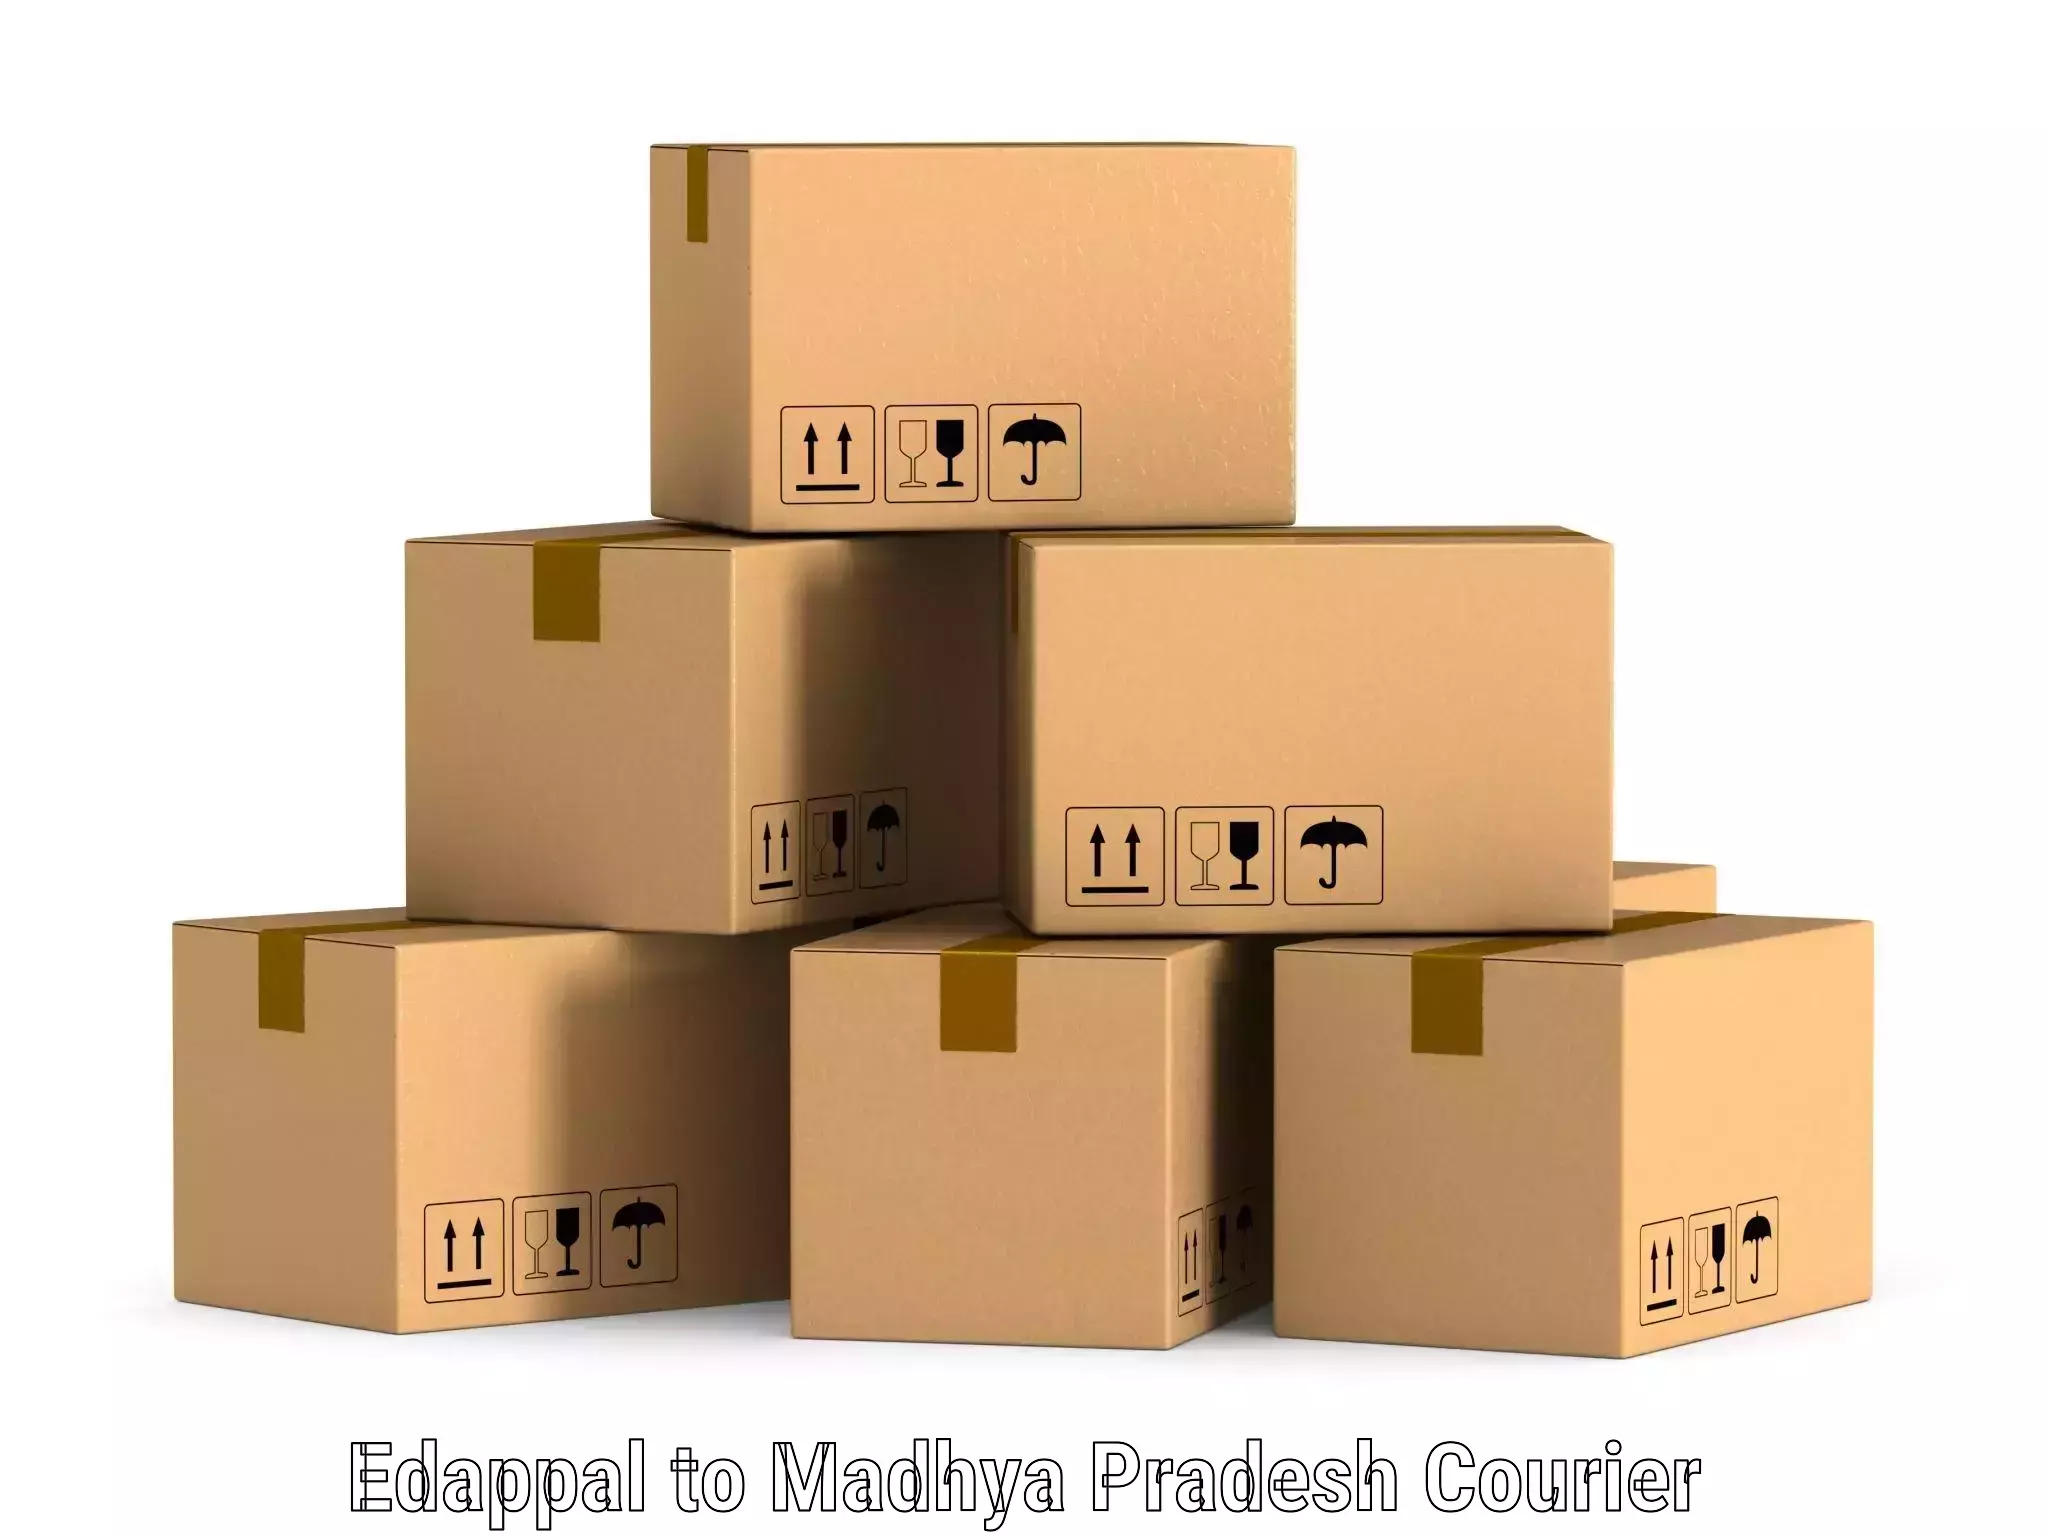 Express courier capabilities Edappal to Nagda